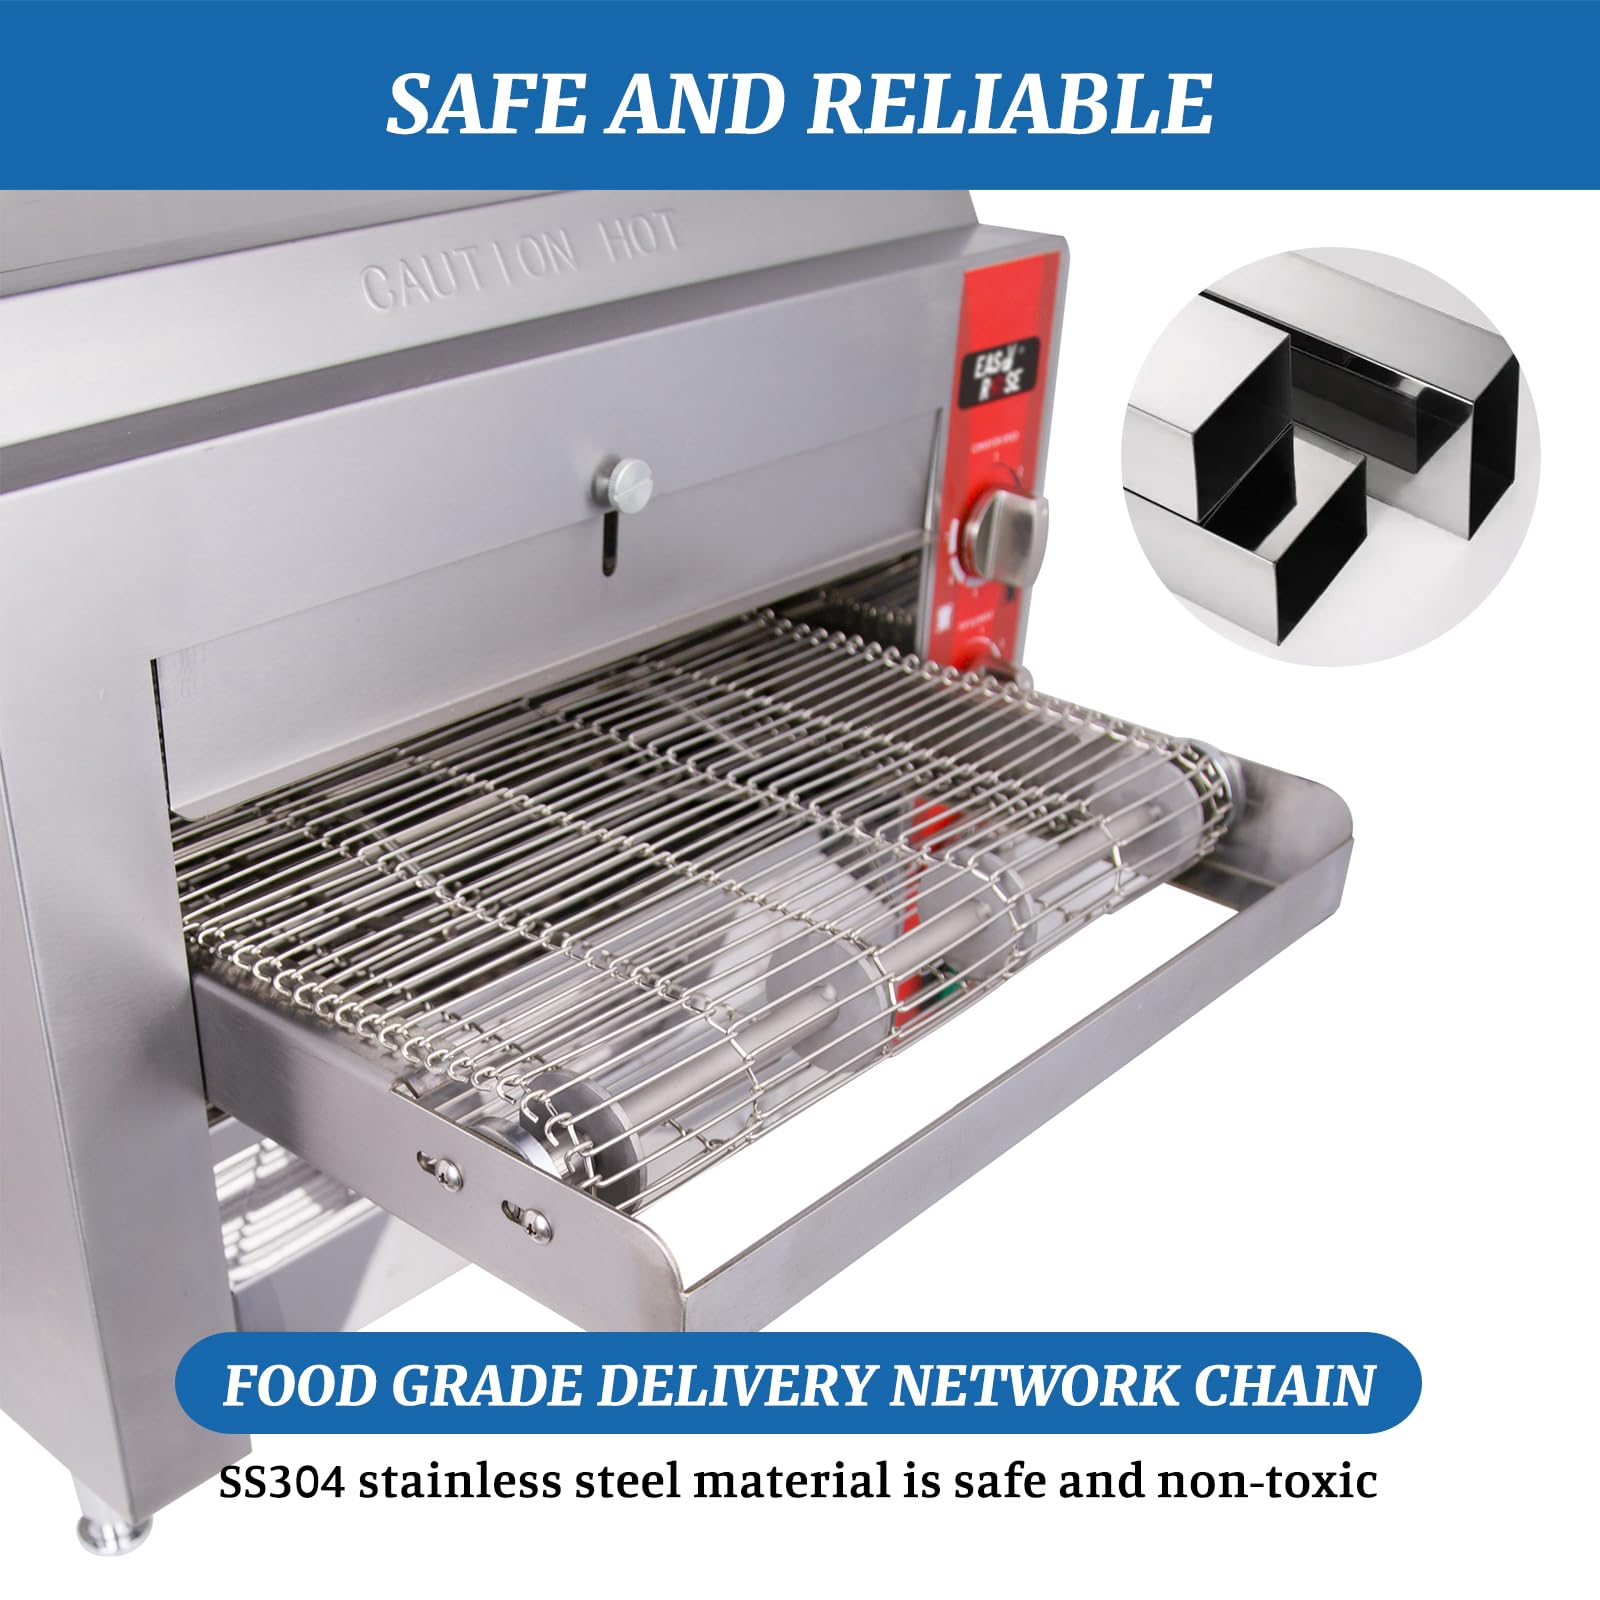 EasyRose Adjustable Speed Conveyor Toasters 50-300 °C /122- 572°F Temperature Range for Bakery Western Restaurant - 240V 3600W (14”wide belt)